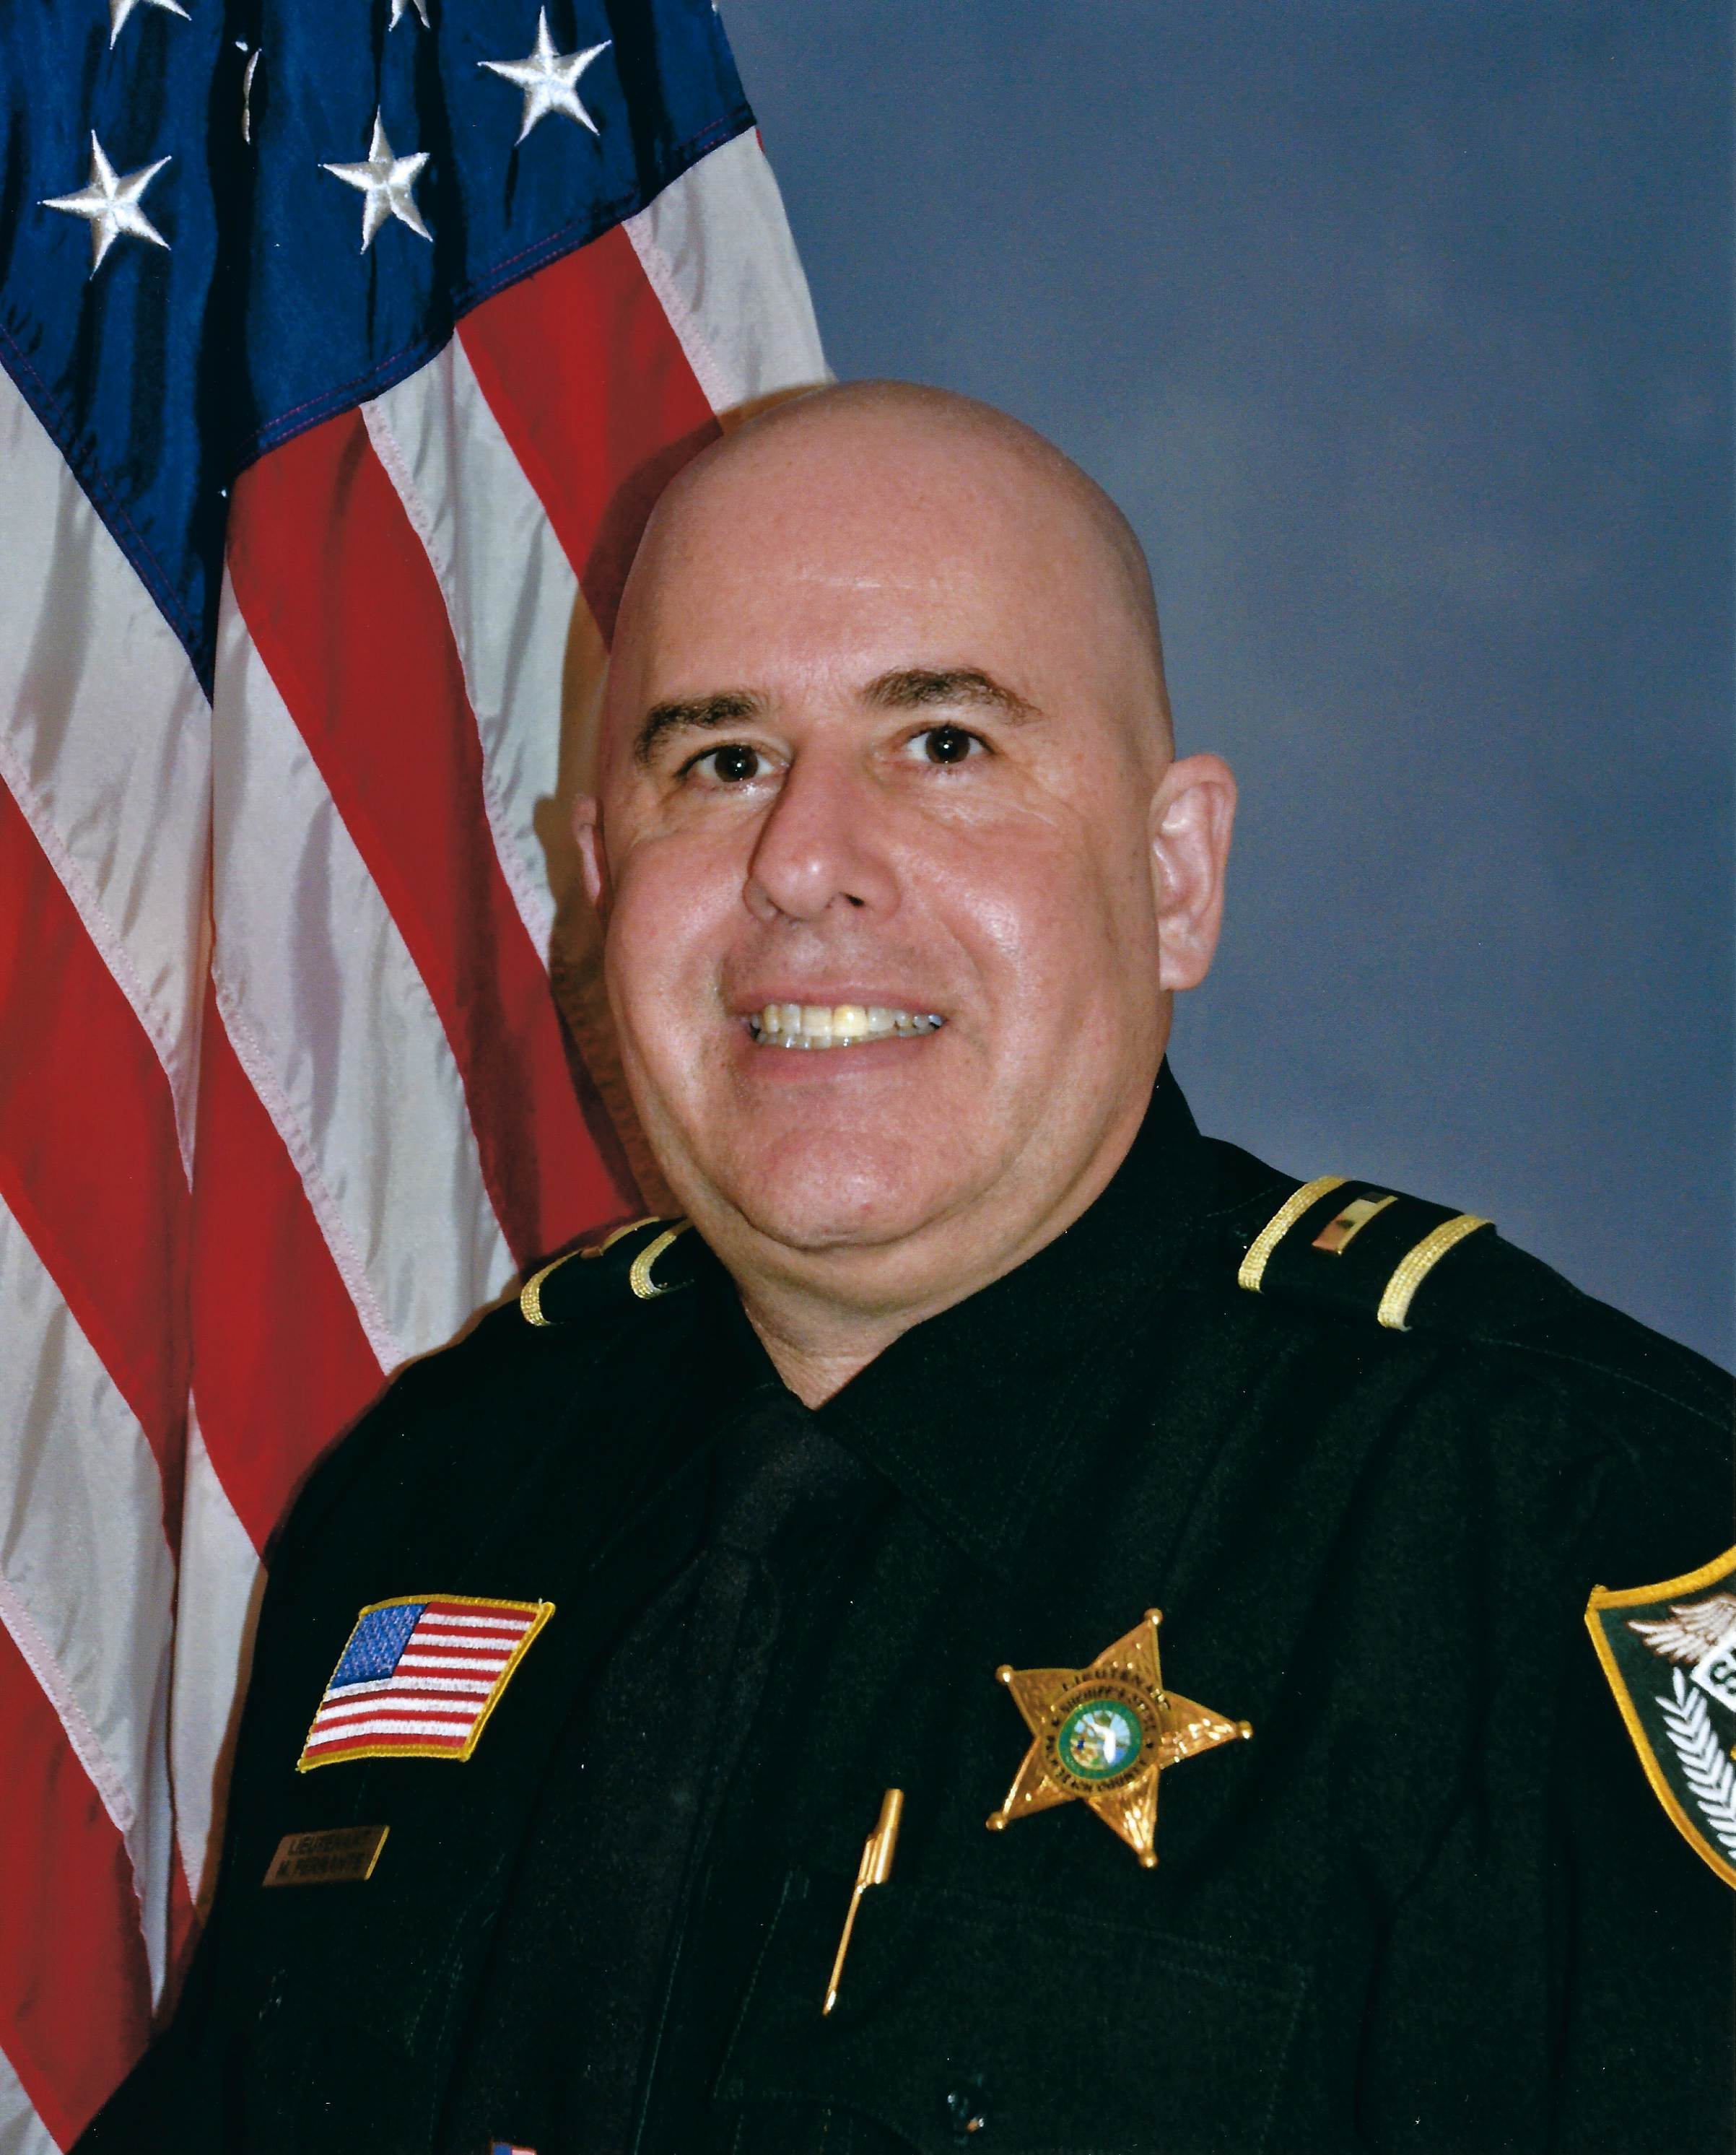 Lt. Mike Ferrante